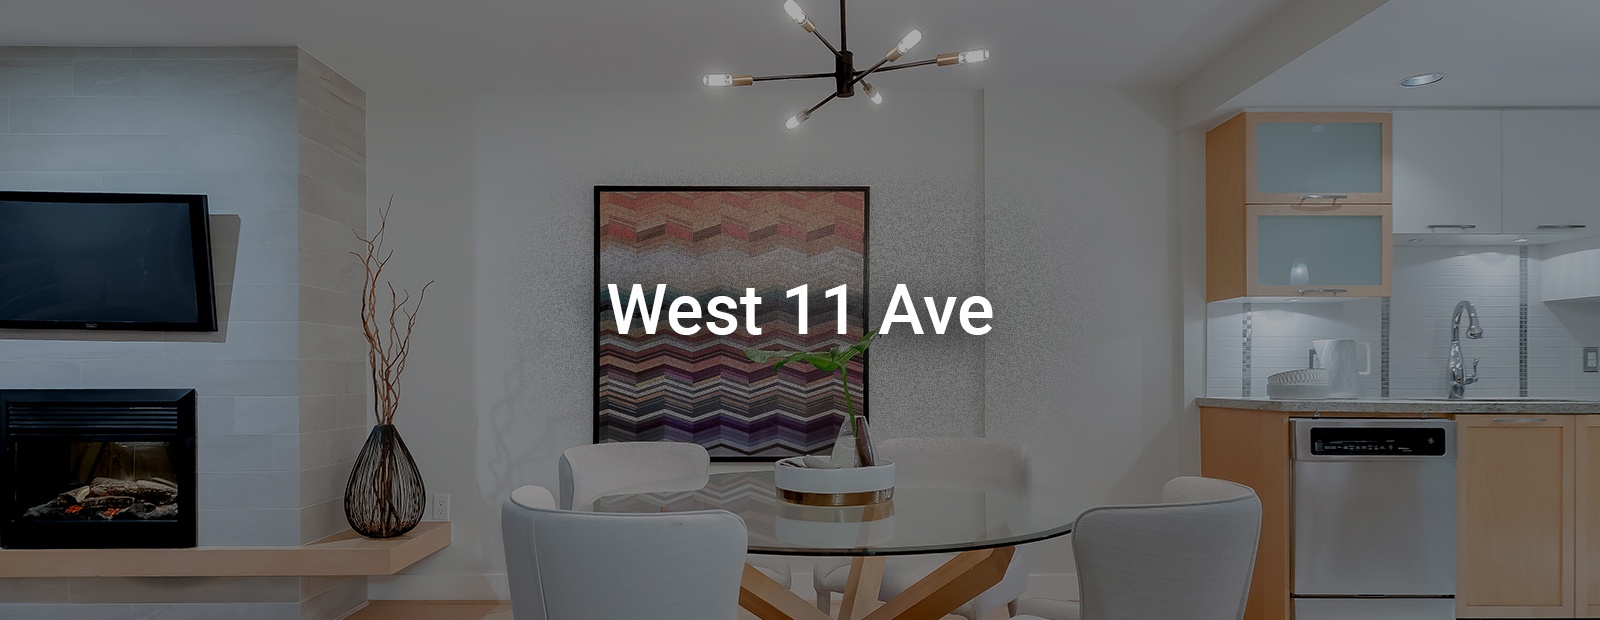 West 11 Ave - Interior Design Company Vancouver